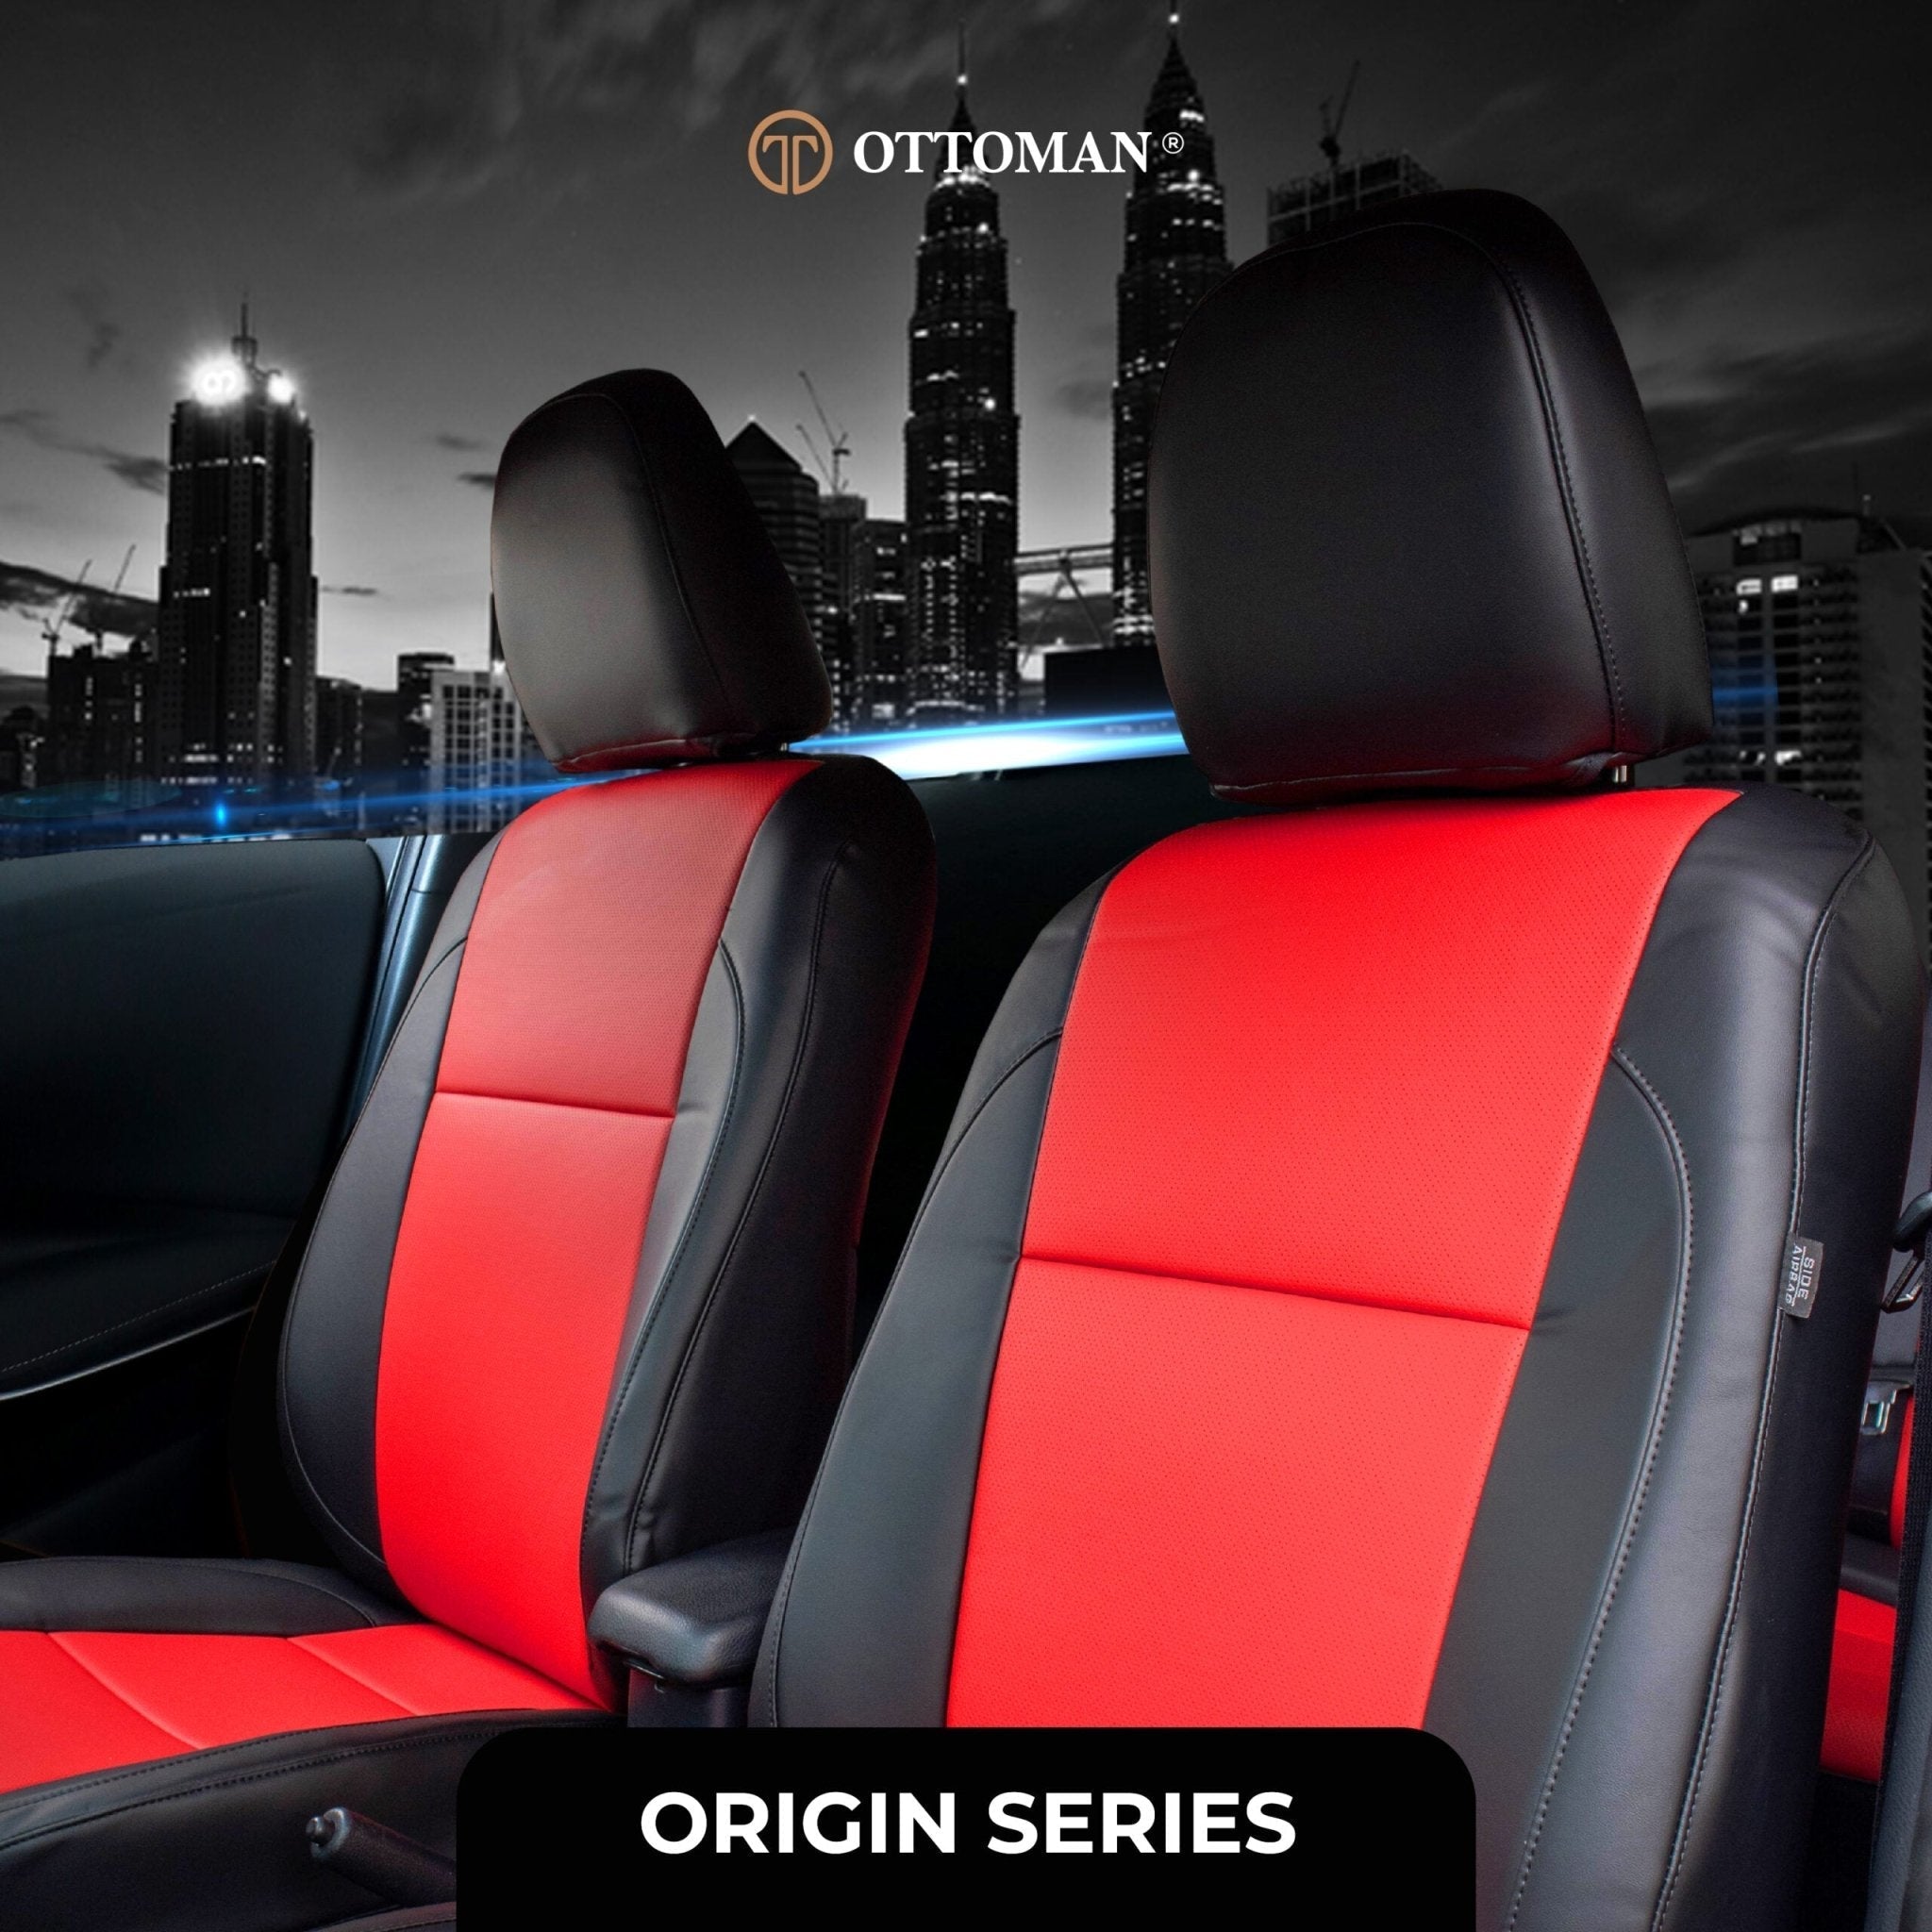 Toyota Fortuner (2005-2015) Ottoman Seat Cover Seat Cover in Klang Selangor, Penang, Johor Bahru - Ottoman Car Mats